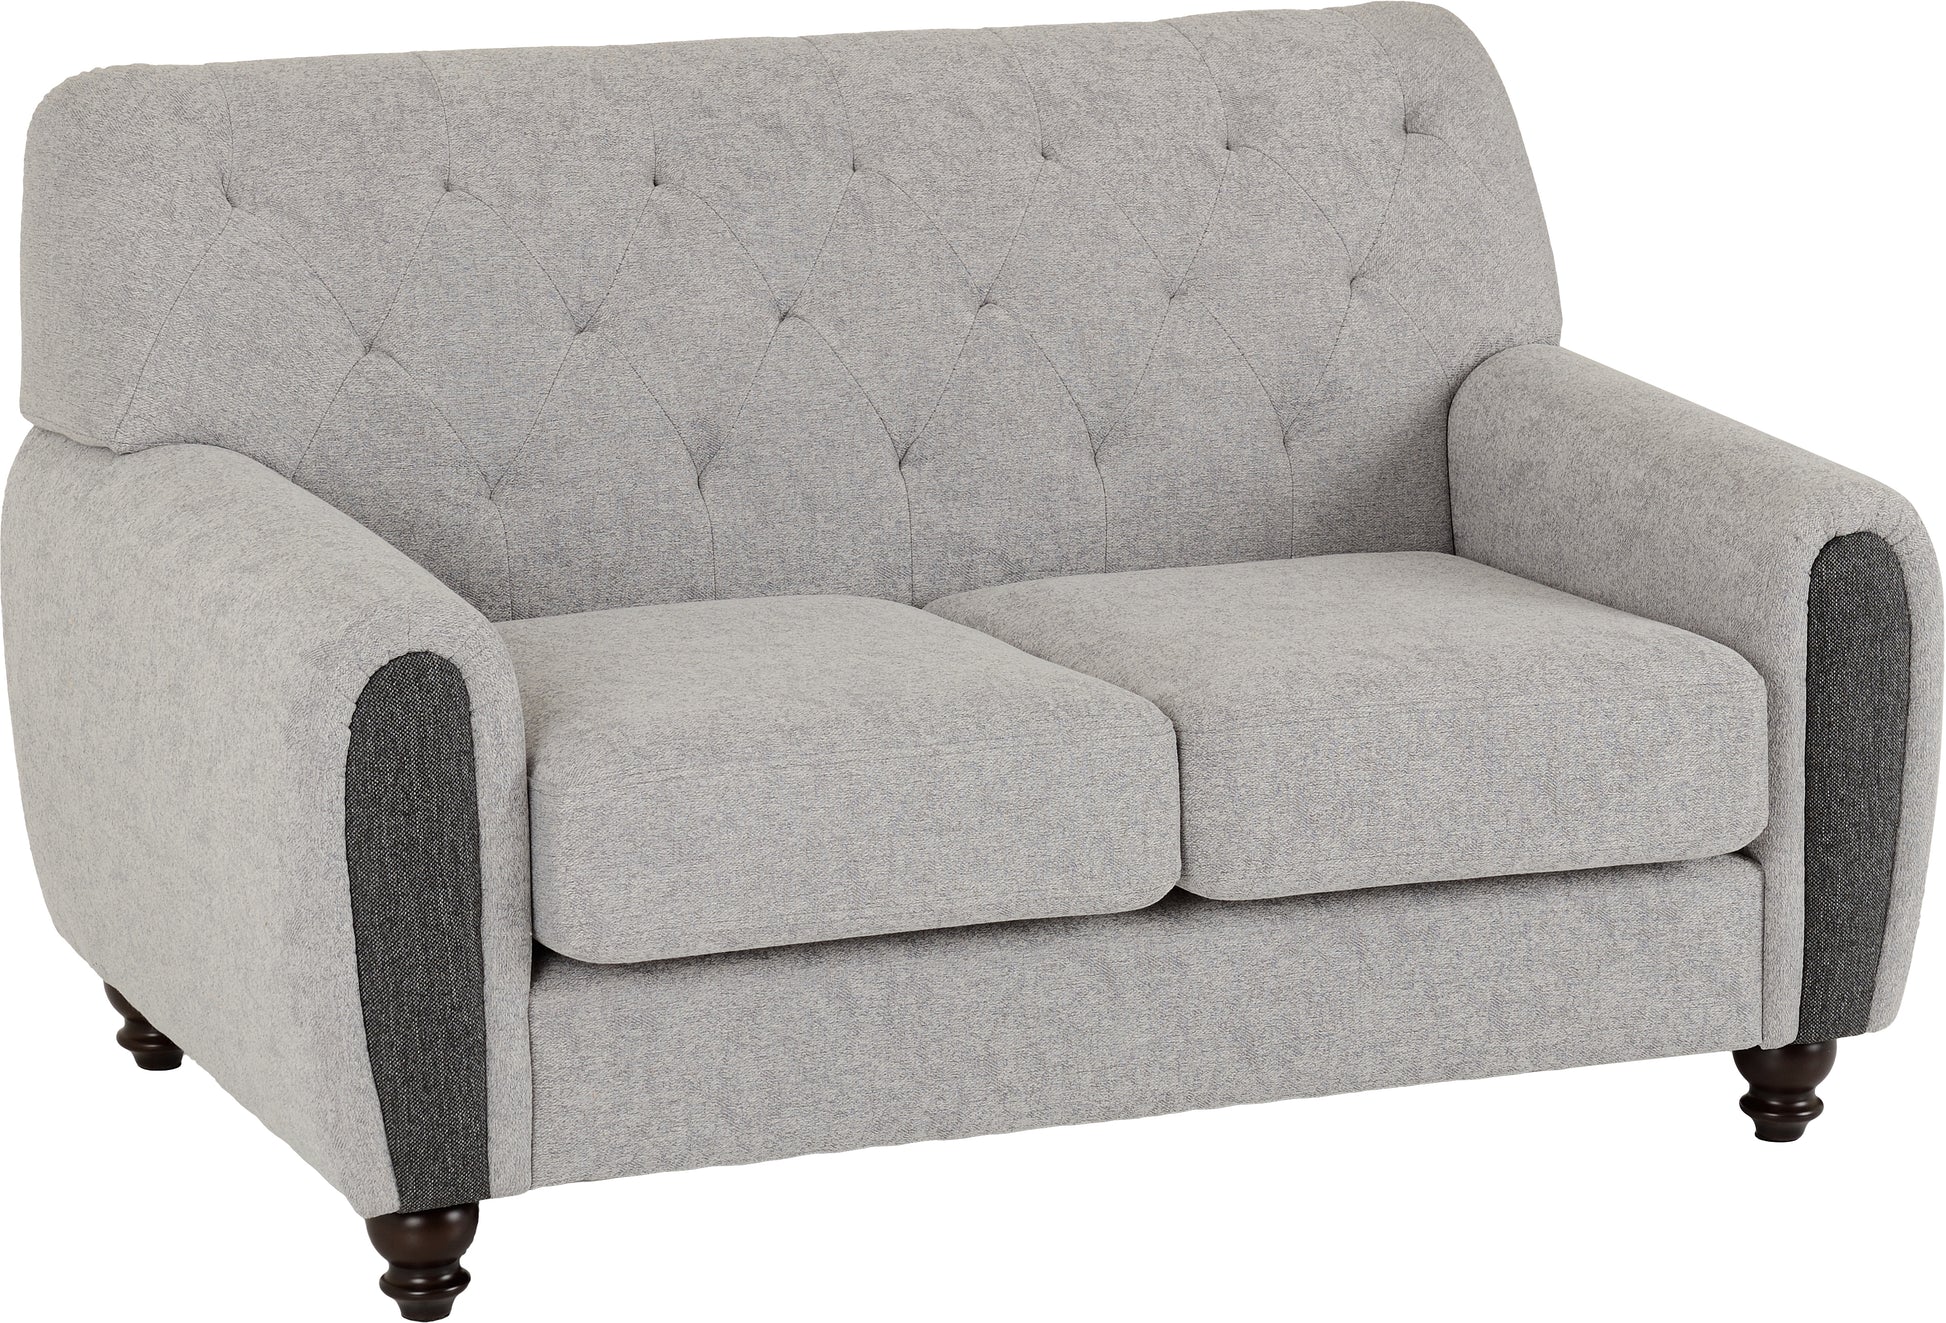 Chester 2 Seater Sofa - Light Grey Fabric